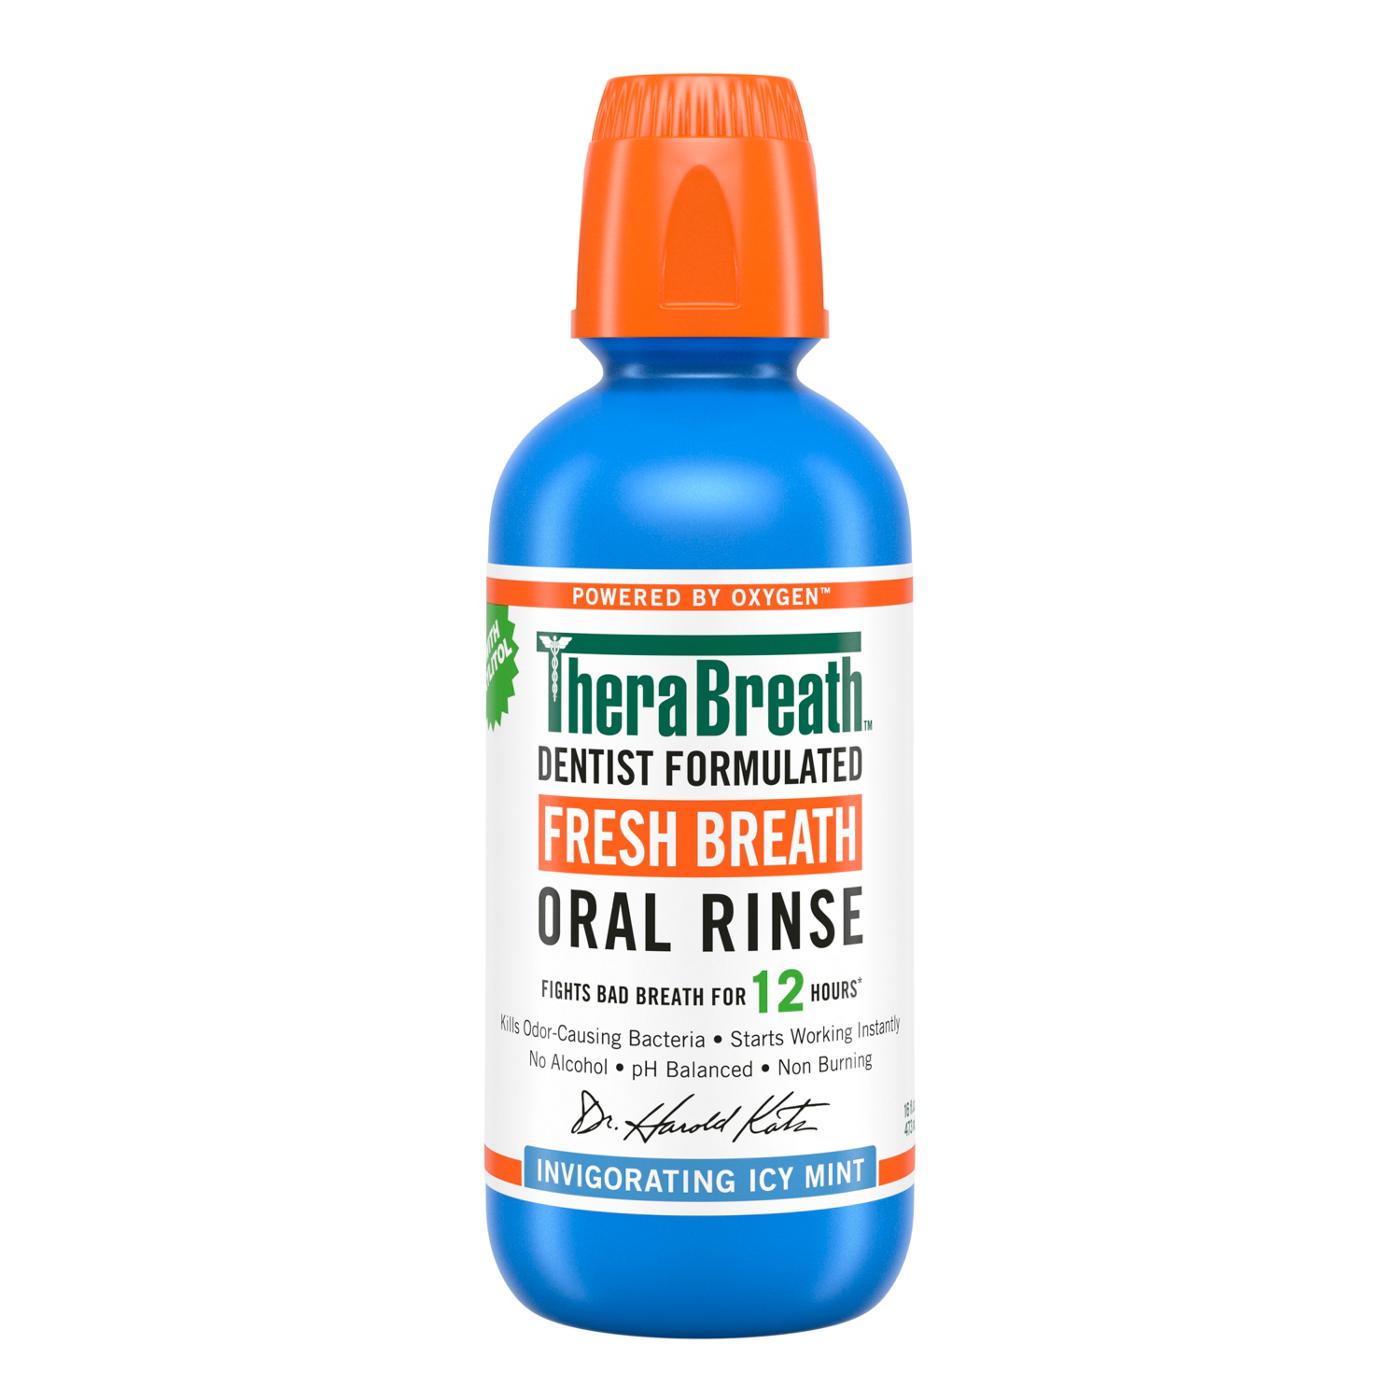 TheraBreath Fresh Breath Oral Rinse - Icy Mint; image 1 of 6